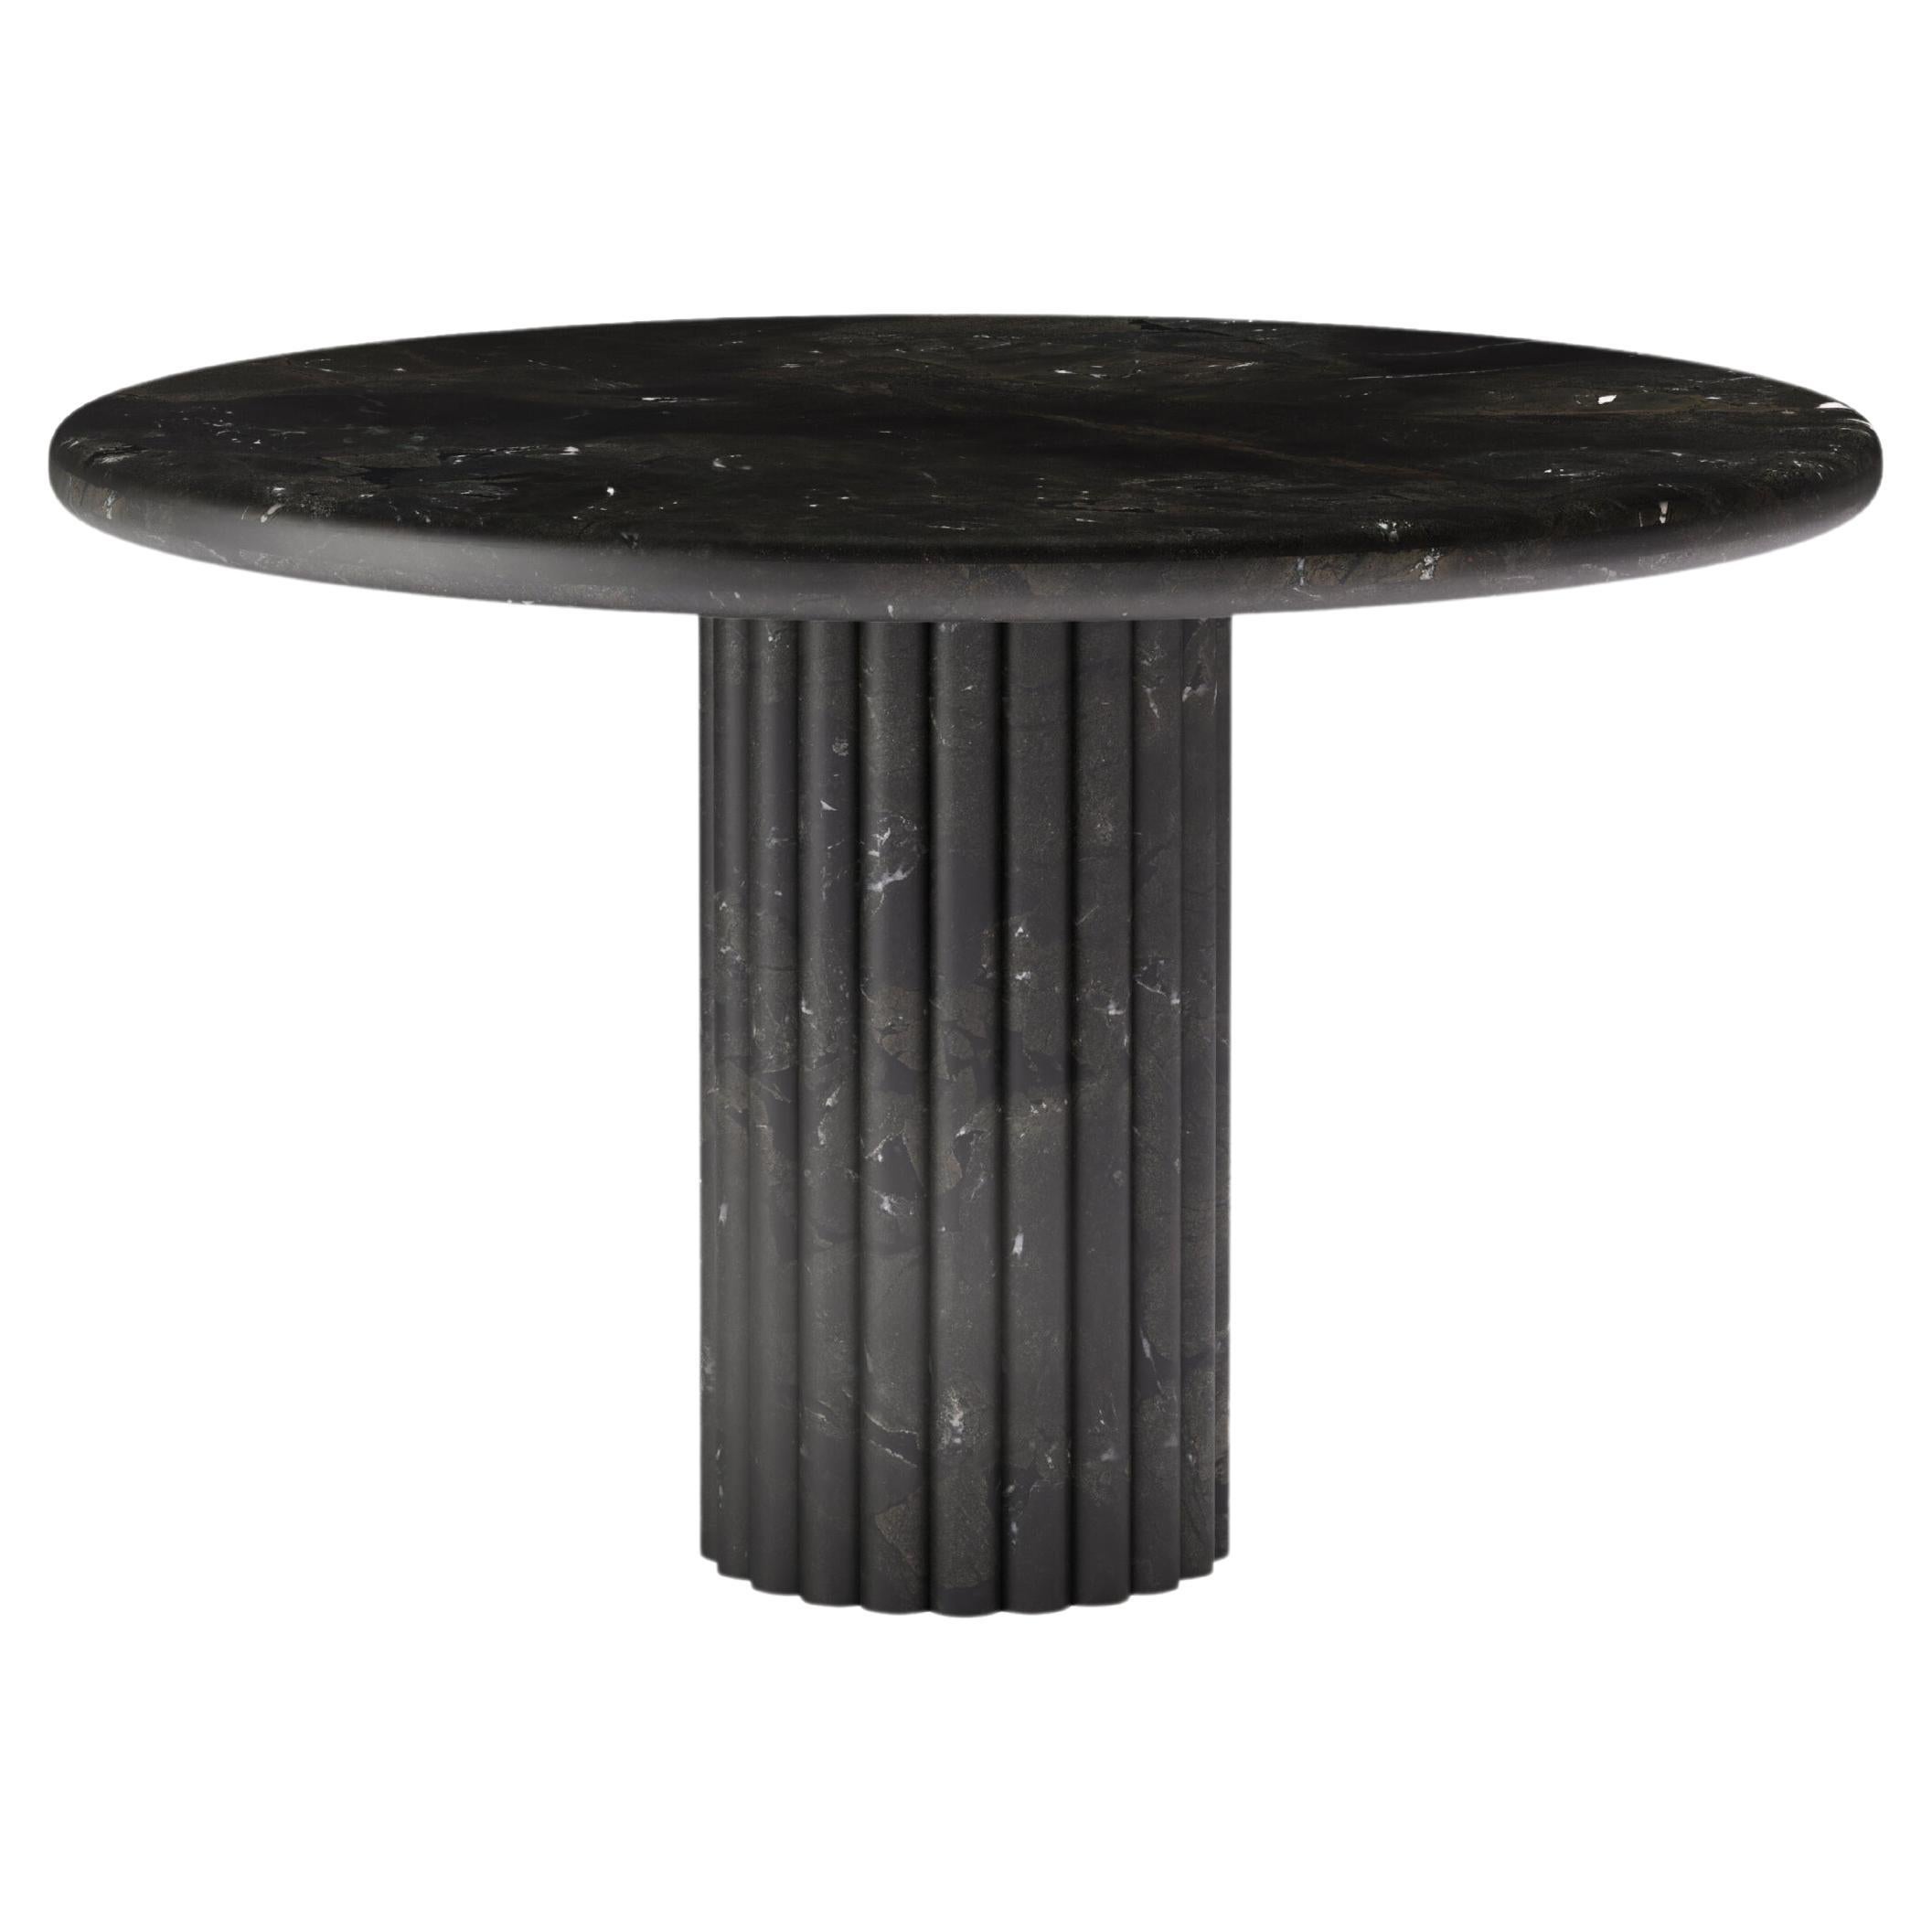 FORM(LA) Fluta Round Dining Table 60”L x 60”W x 30”H Negresco Quartzite For Sale